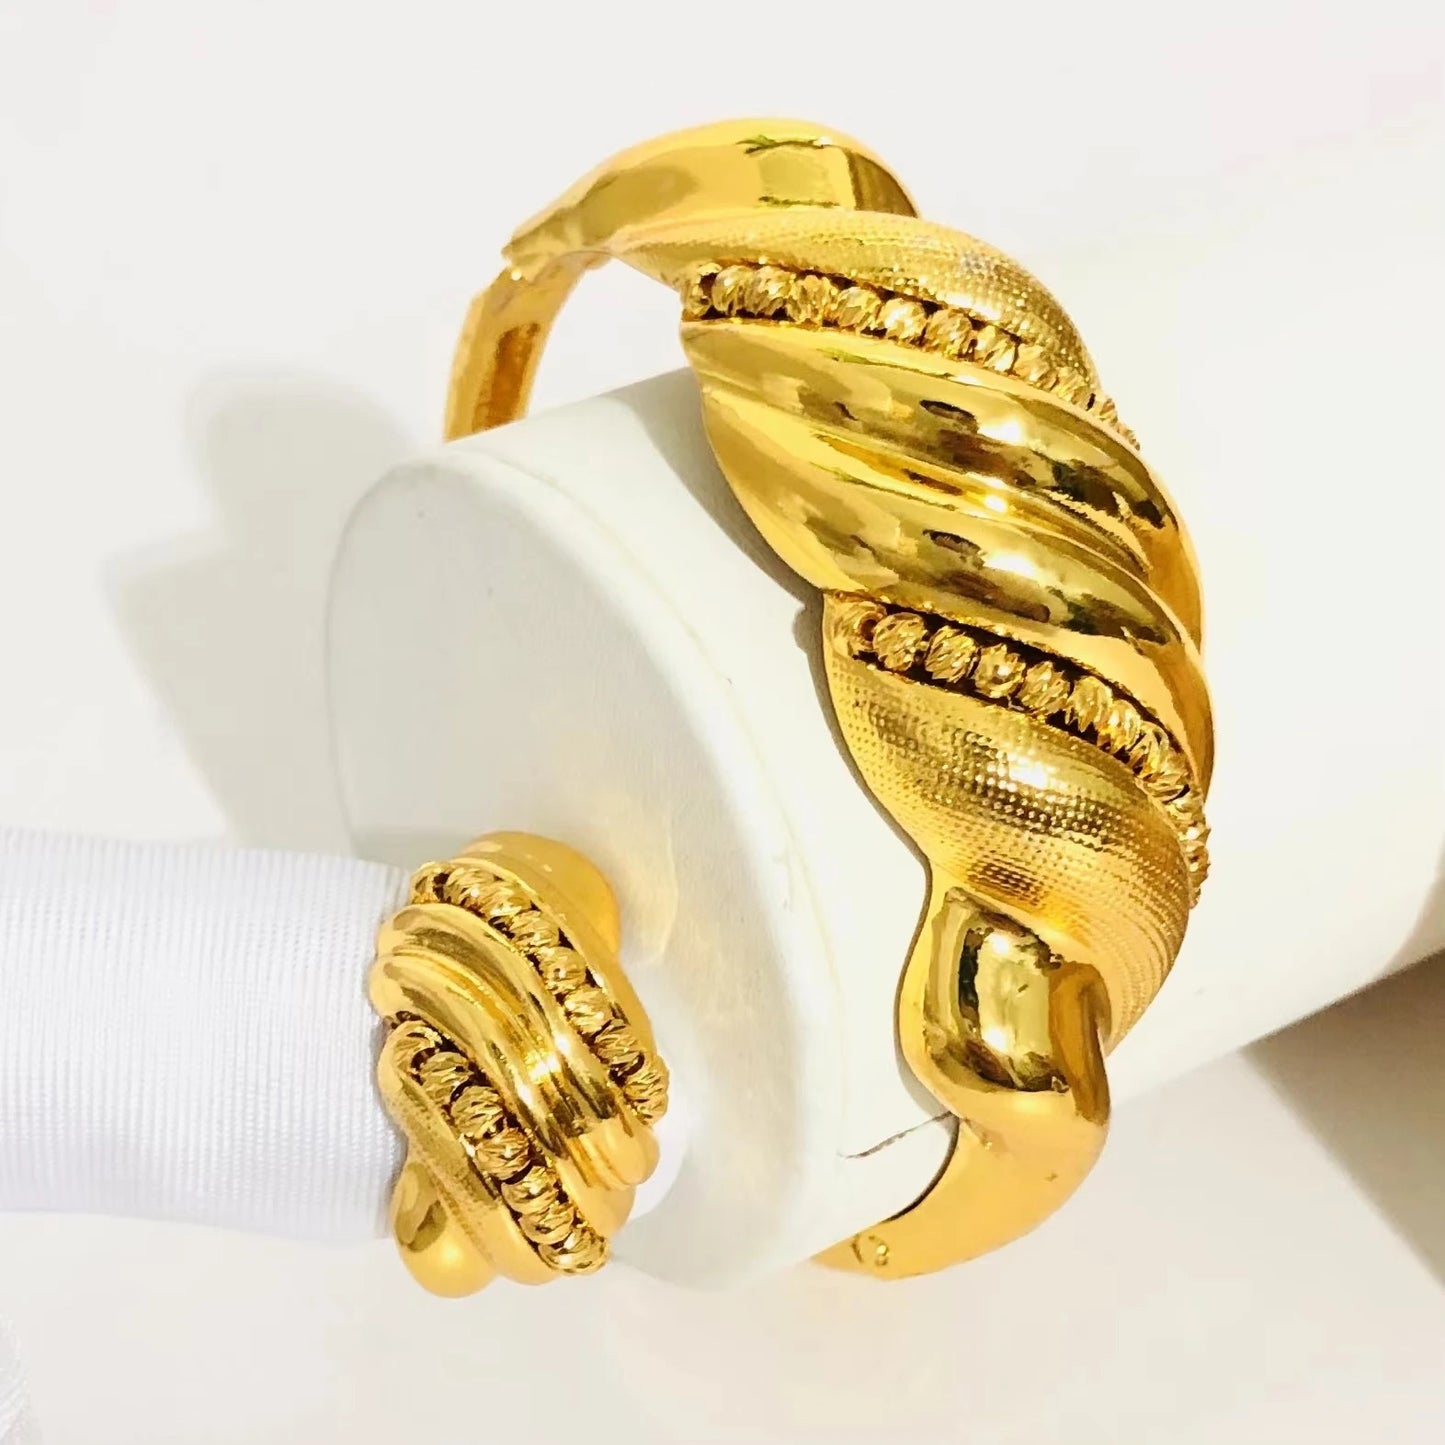 Sarro’s stunning bangle and finger ring